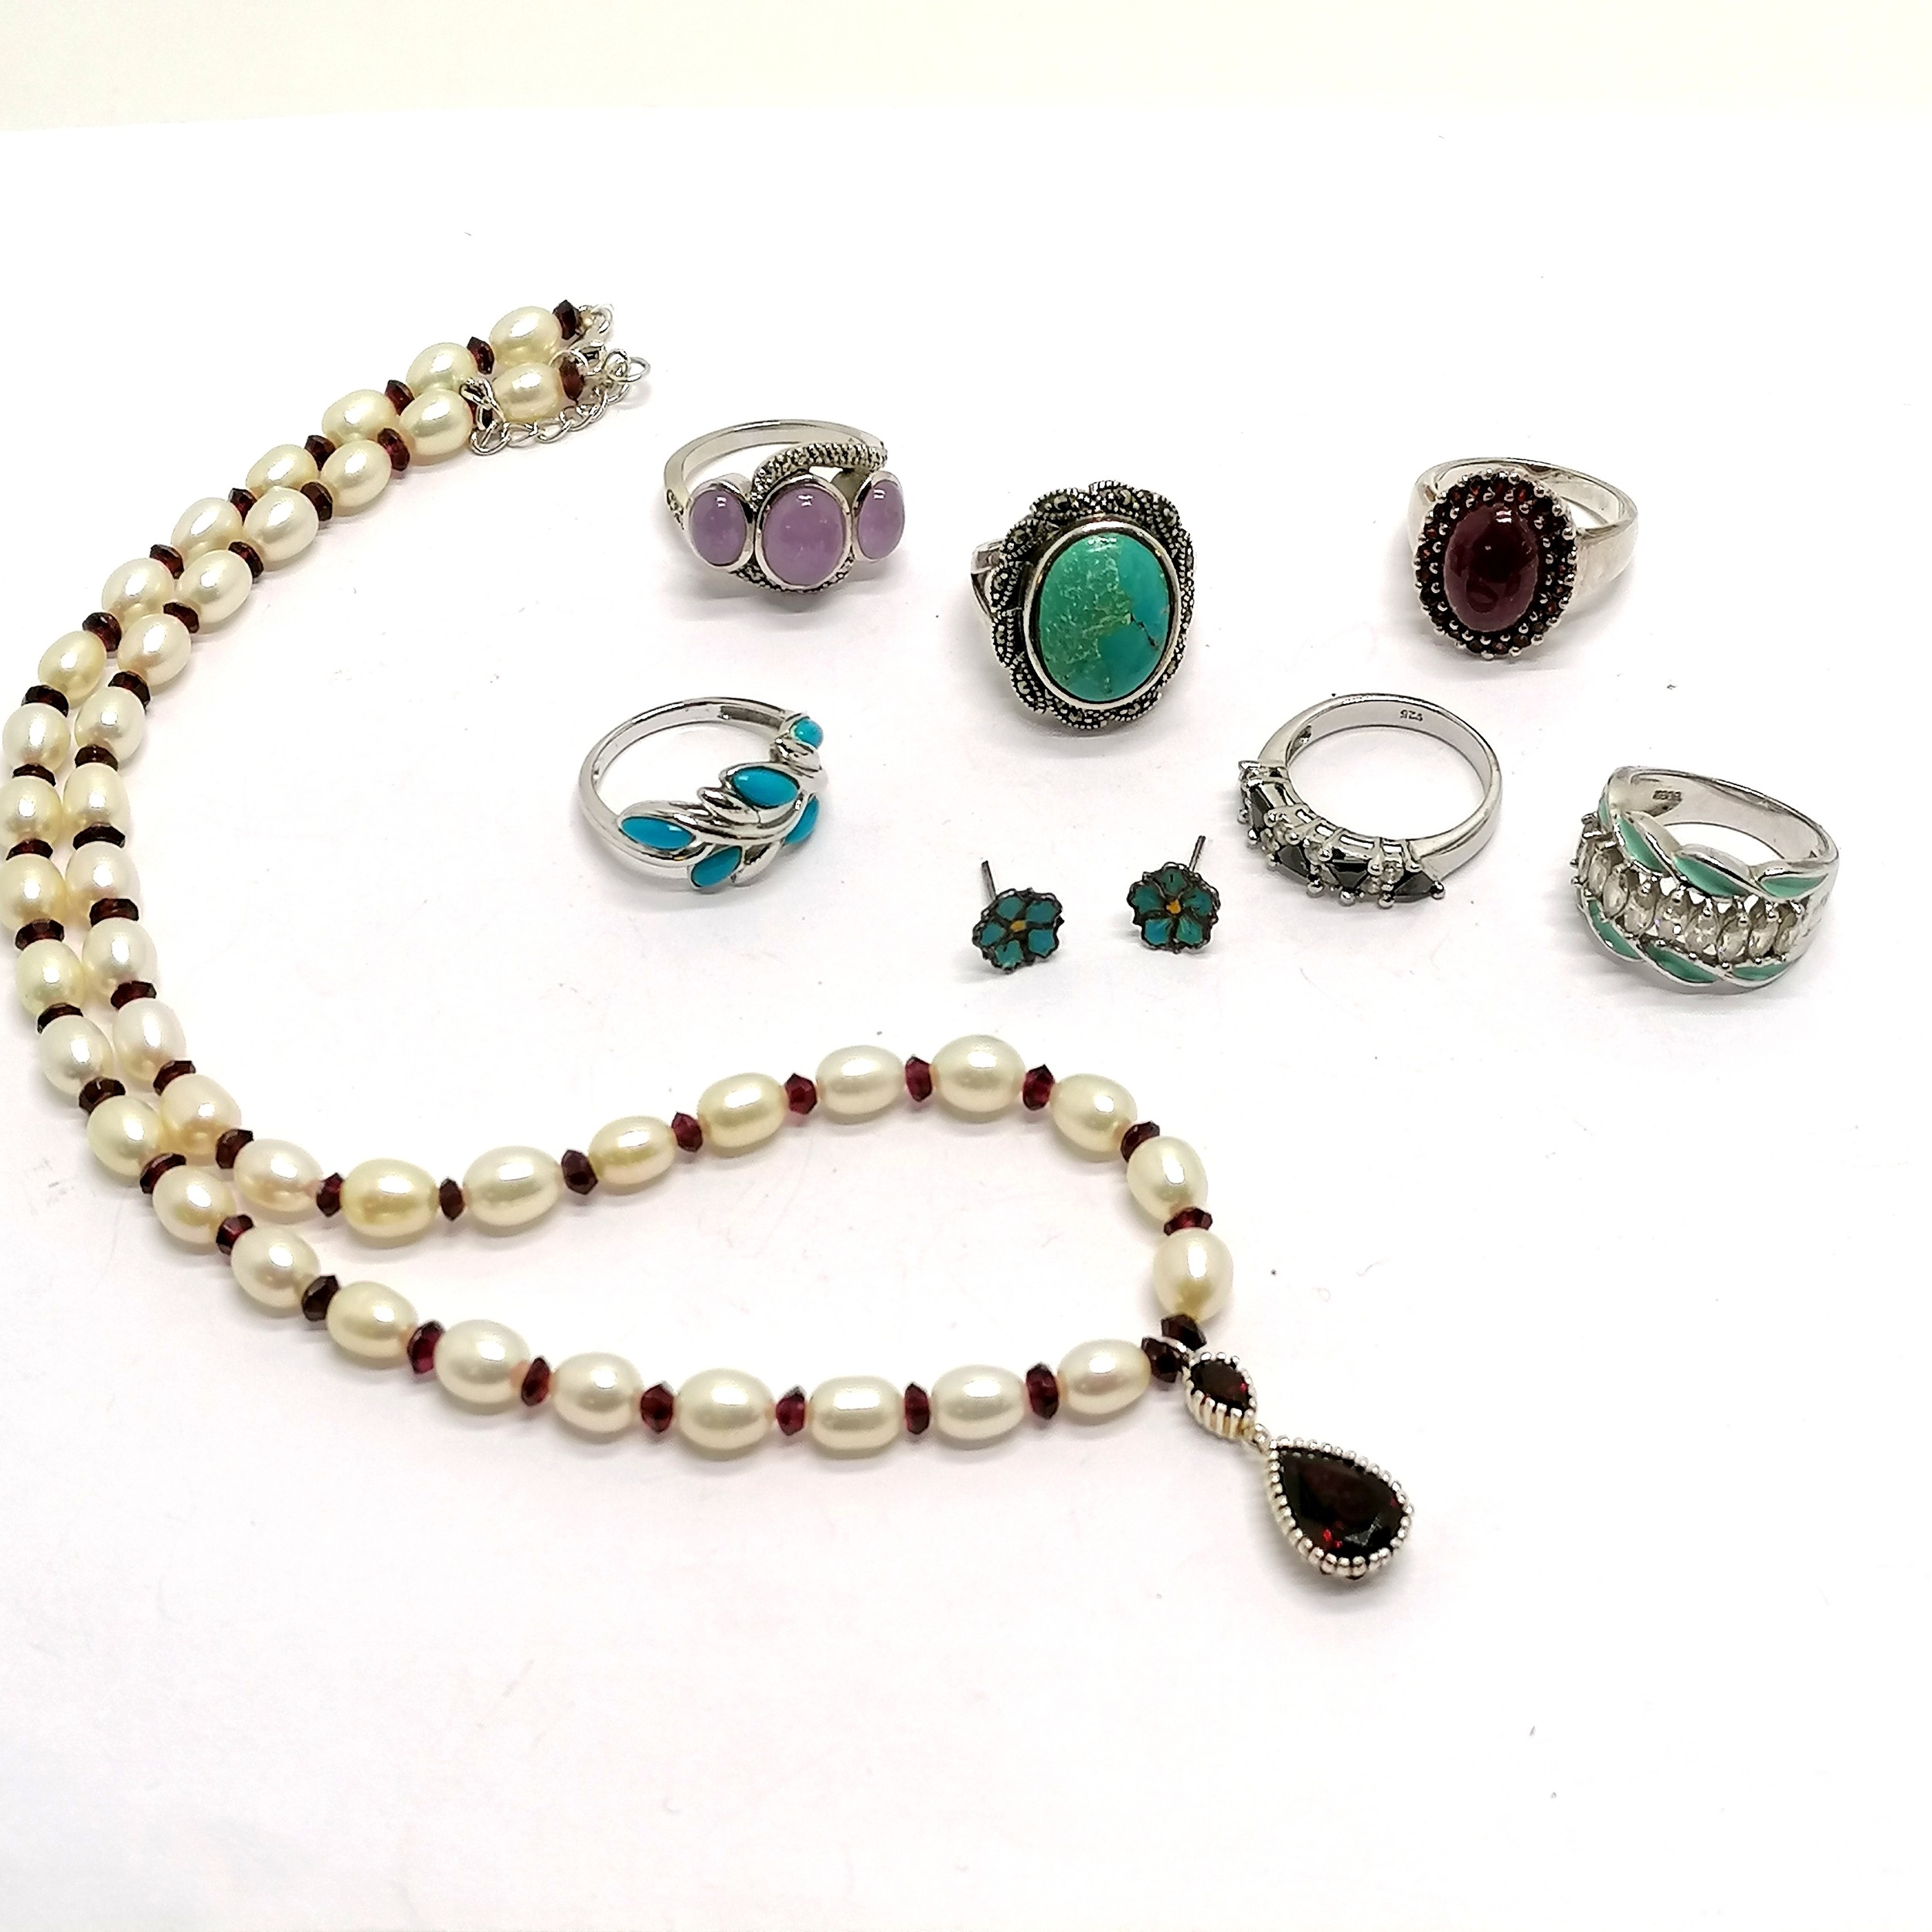 6 x silver stone set rings (inc ruby (cabochon), amethyst, turquoise etc), silver garnet / pearl